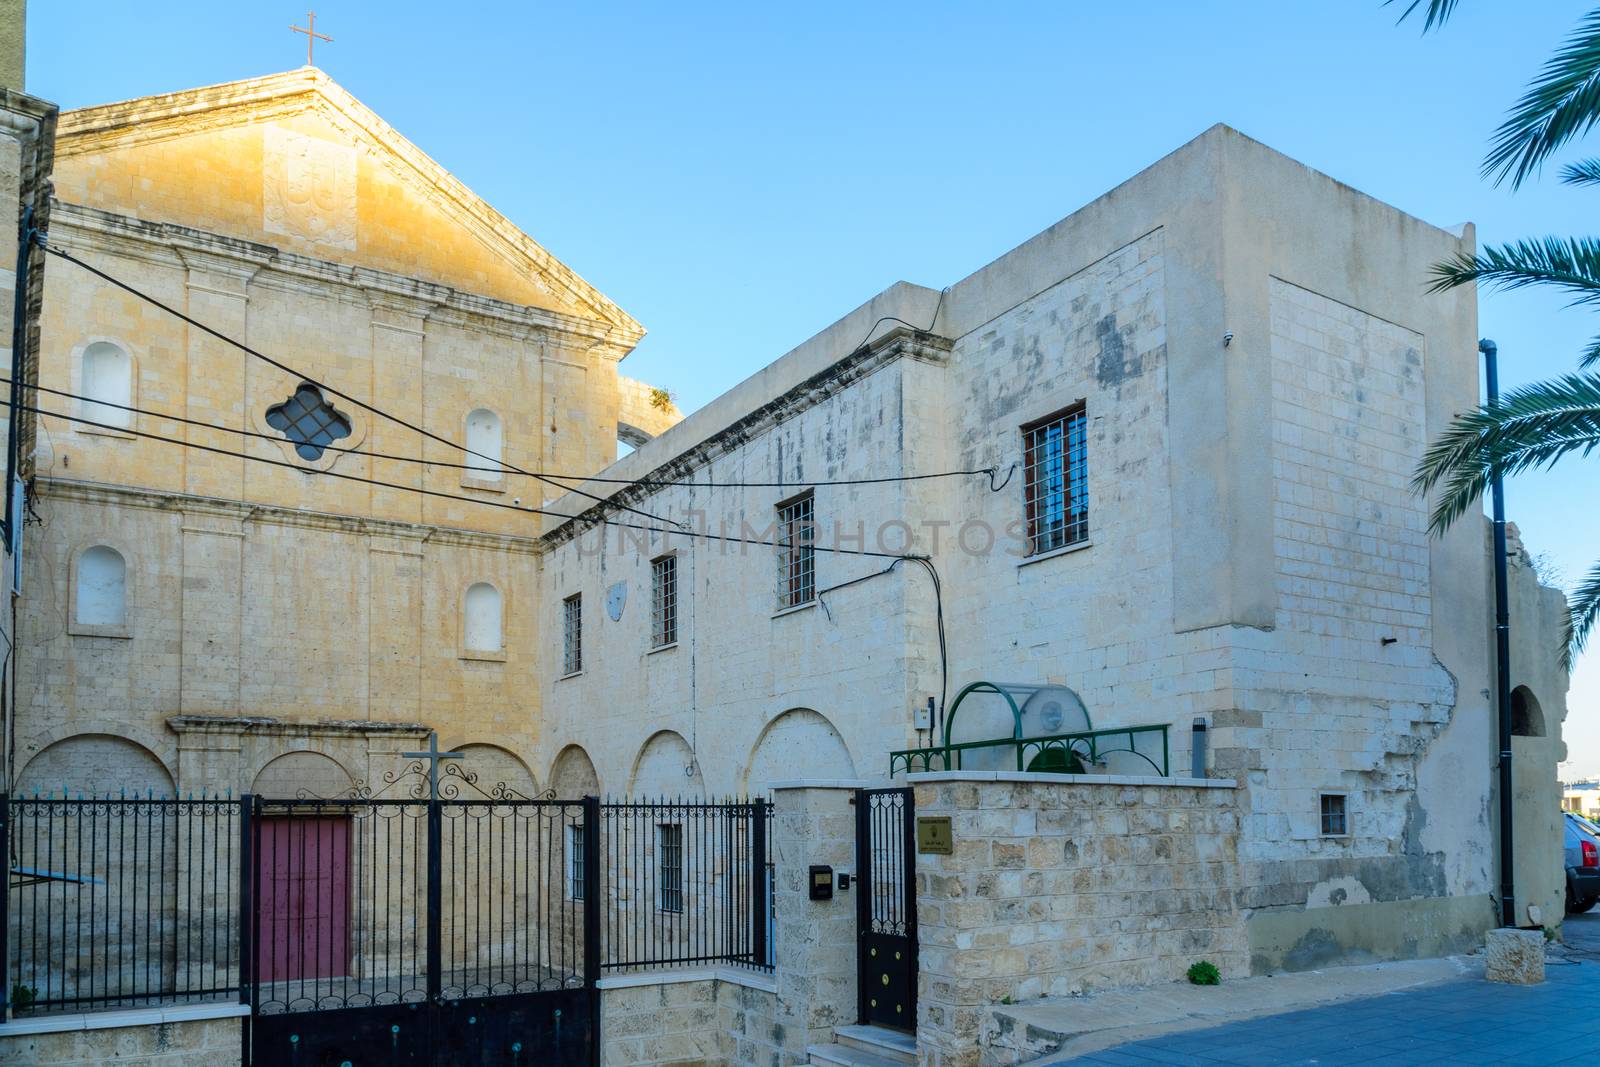 Carmelite Monastery, Haifa by RnDmS